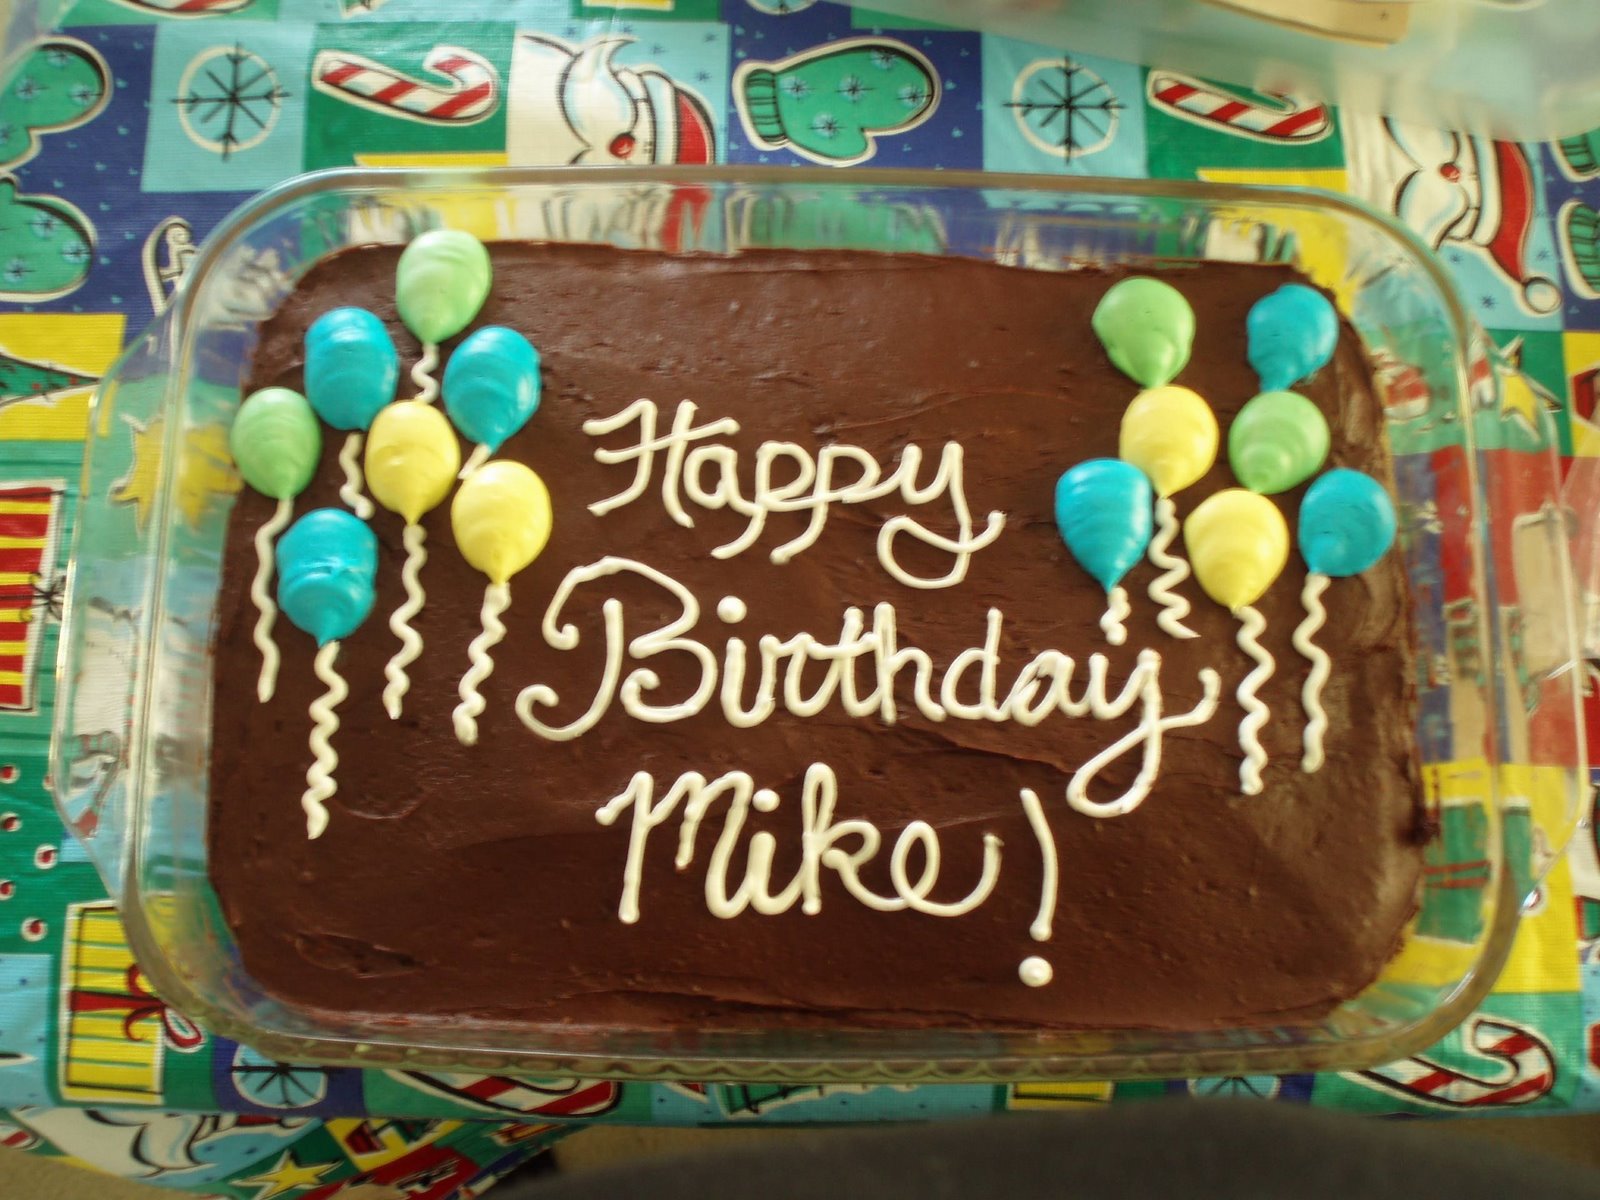 Happy Birthday Mike Cake.